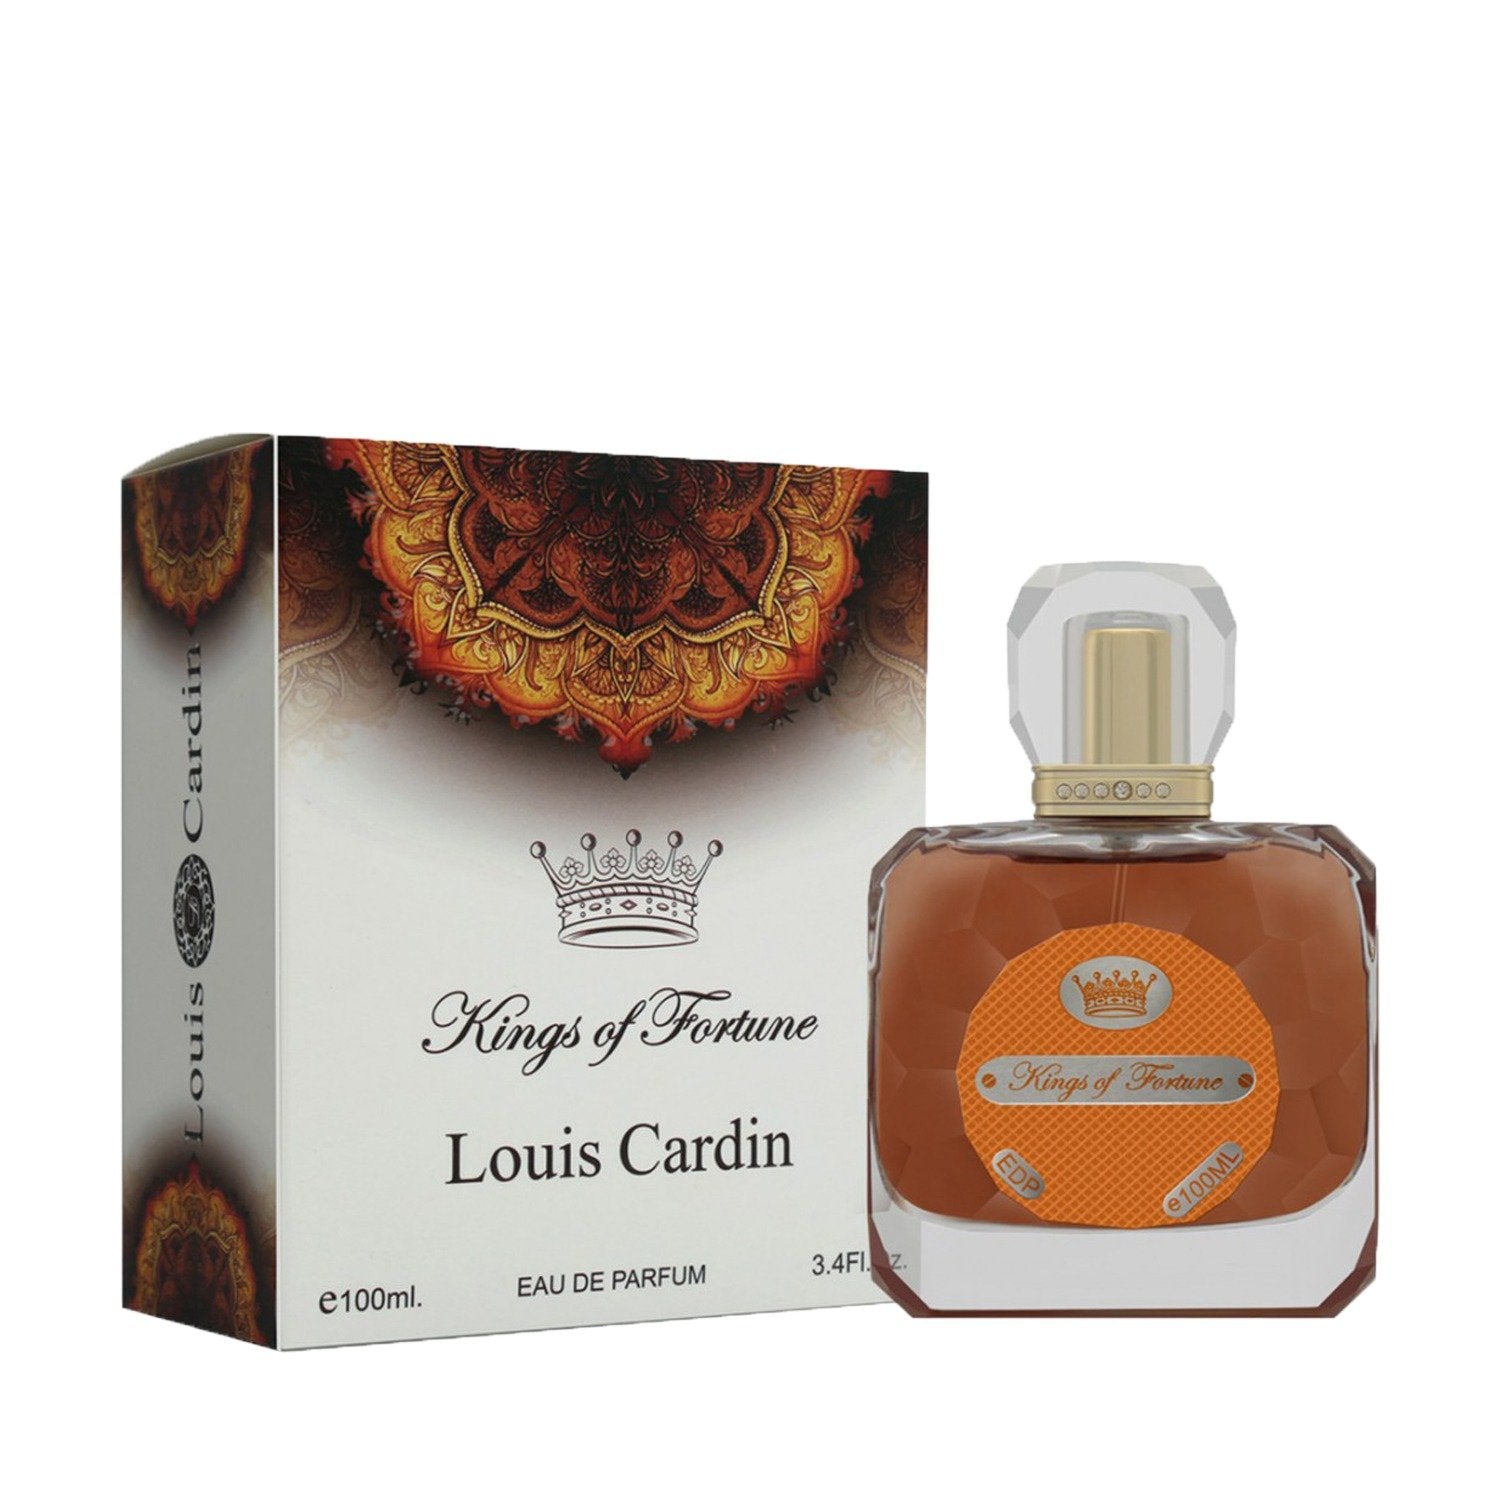 Perfume for men - Louis Cardin Credible Homme